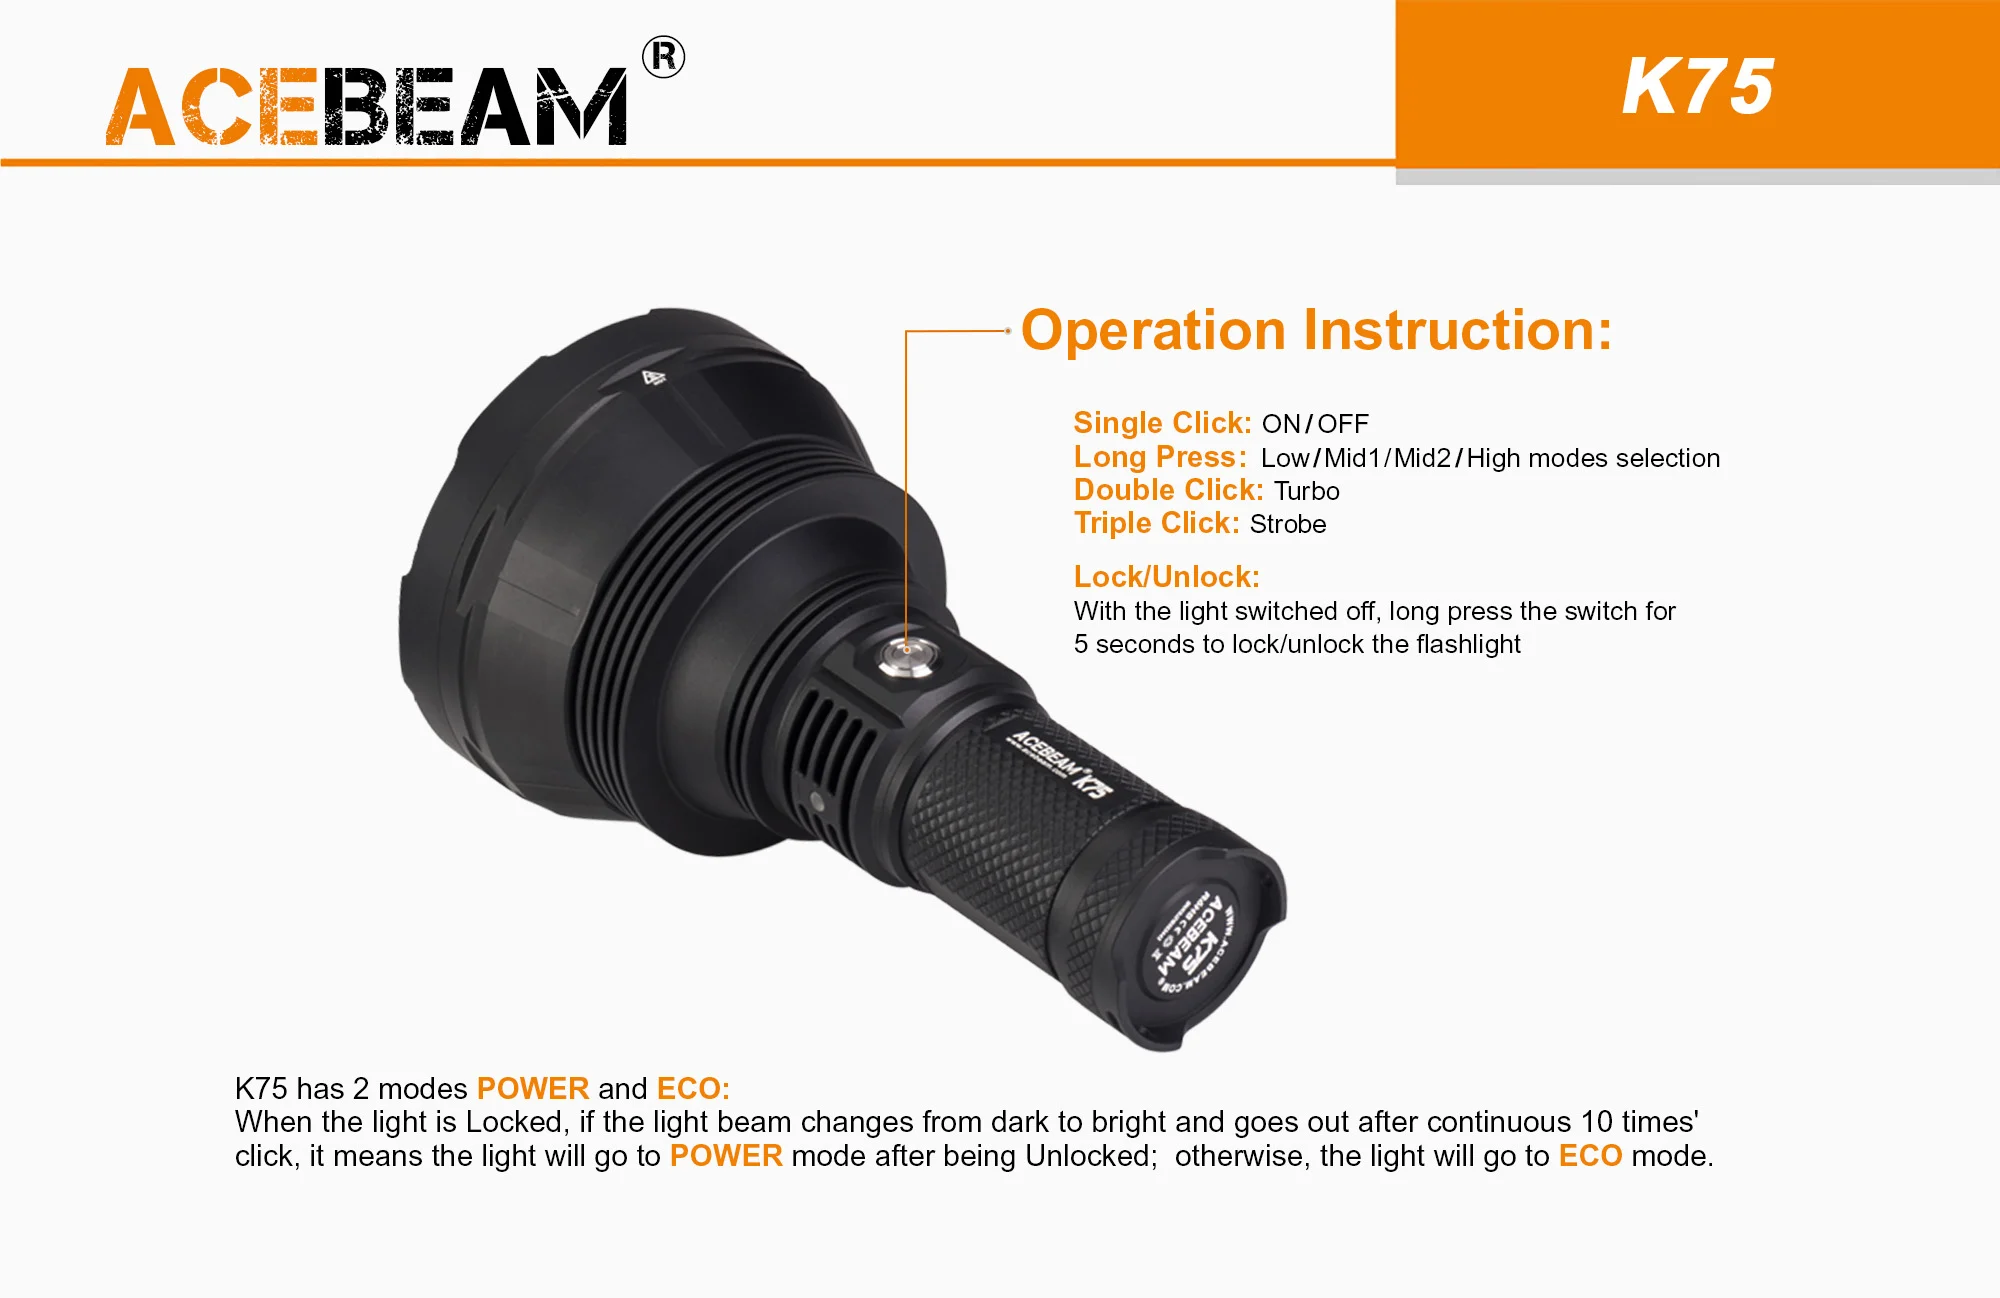 Acebeam K75 1xLUMINUS SBT-90-GEN2 LED 6300 lumens  High Power Search Lights